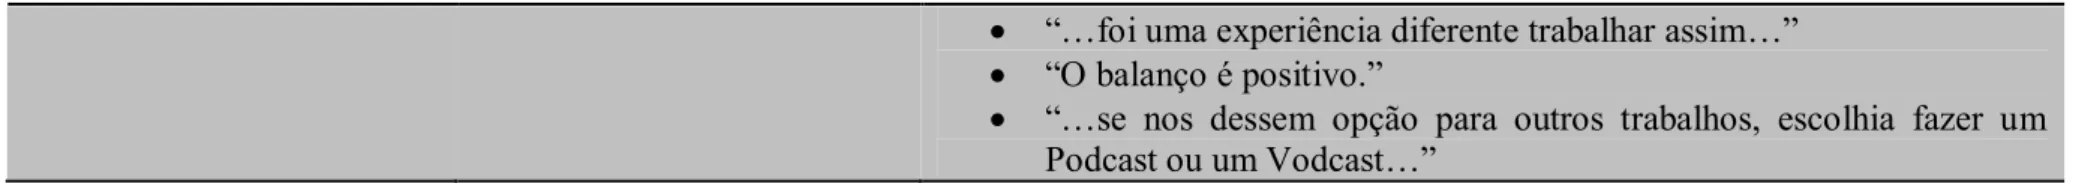 Tabela 9: Análise da entrevista – Podcasts e Vodcasts (segundo os alunos) (N=14)